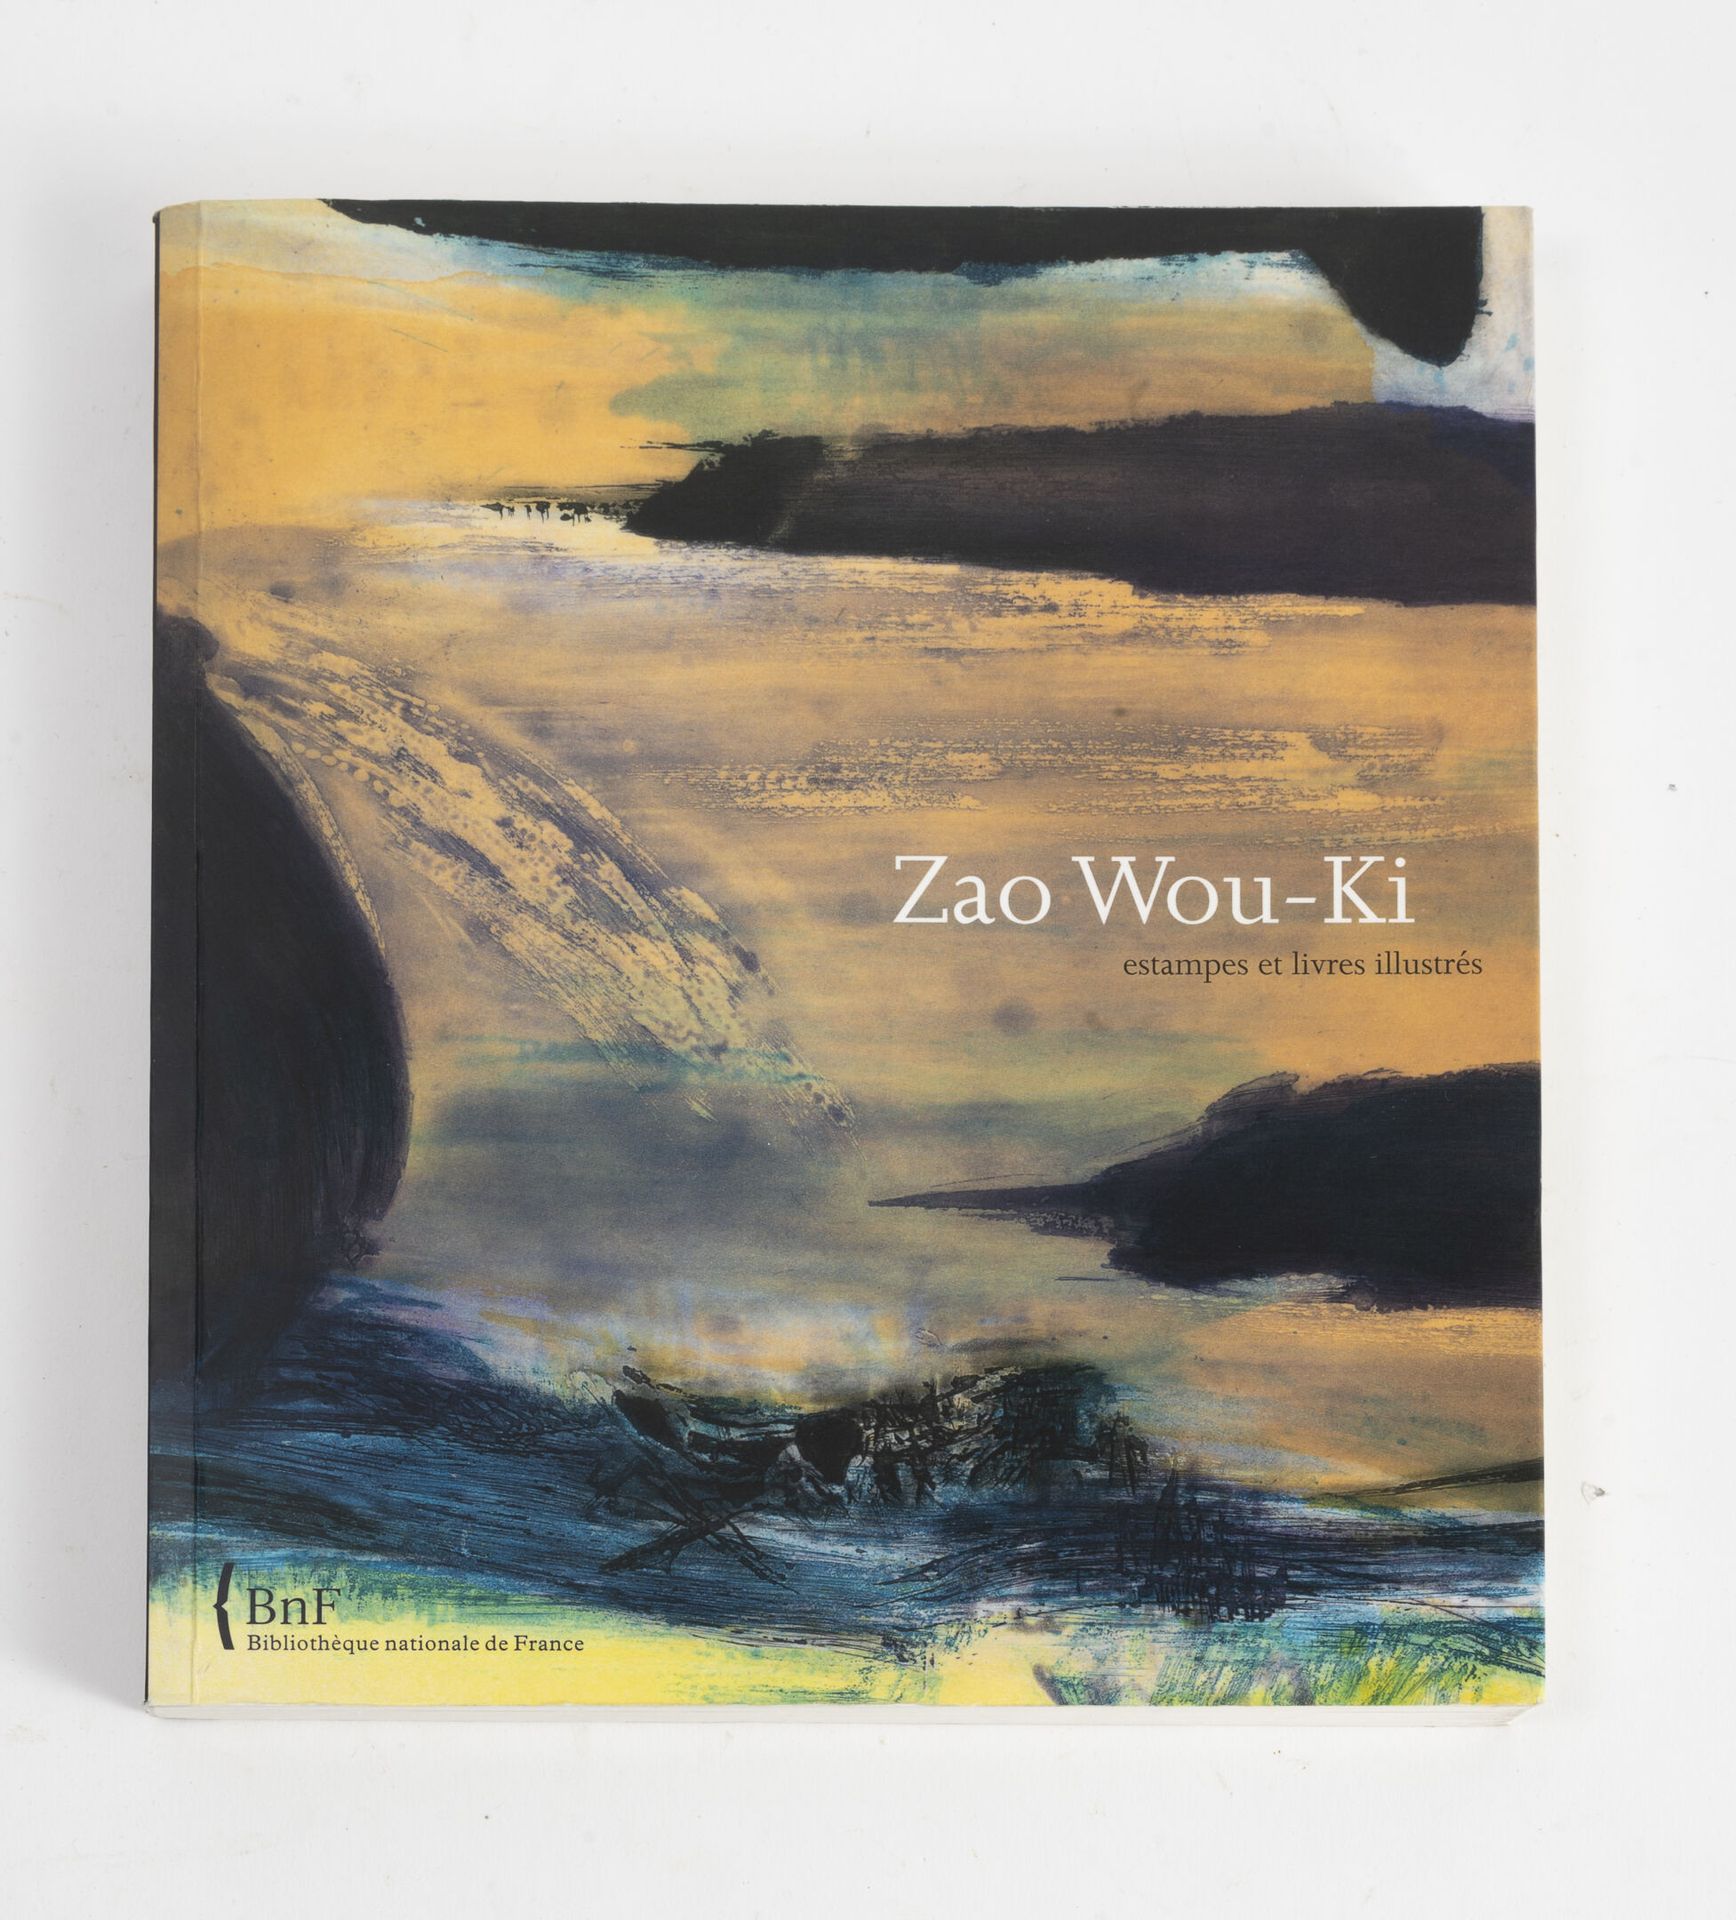 COLLECTIF Zao Wou-ki, grabados y libros ilustrados.

Catálogo de la exposición e&hellip;